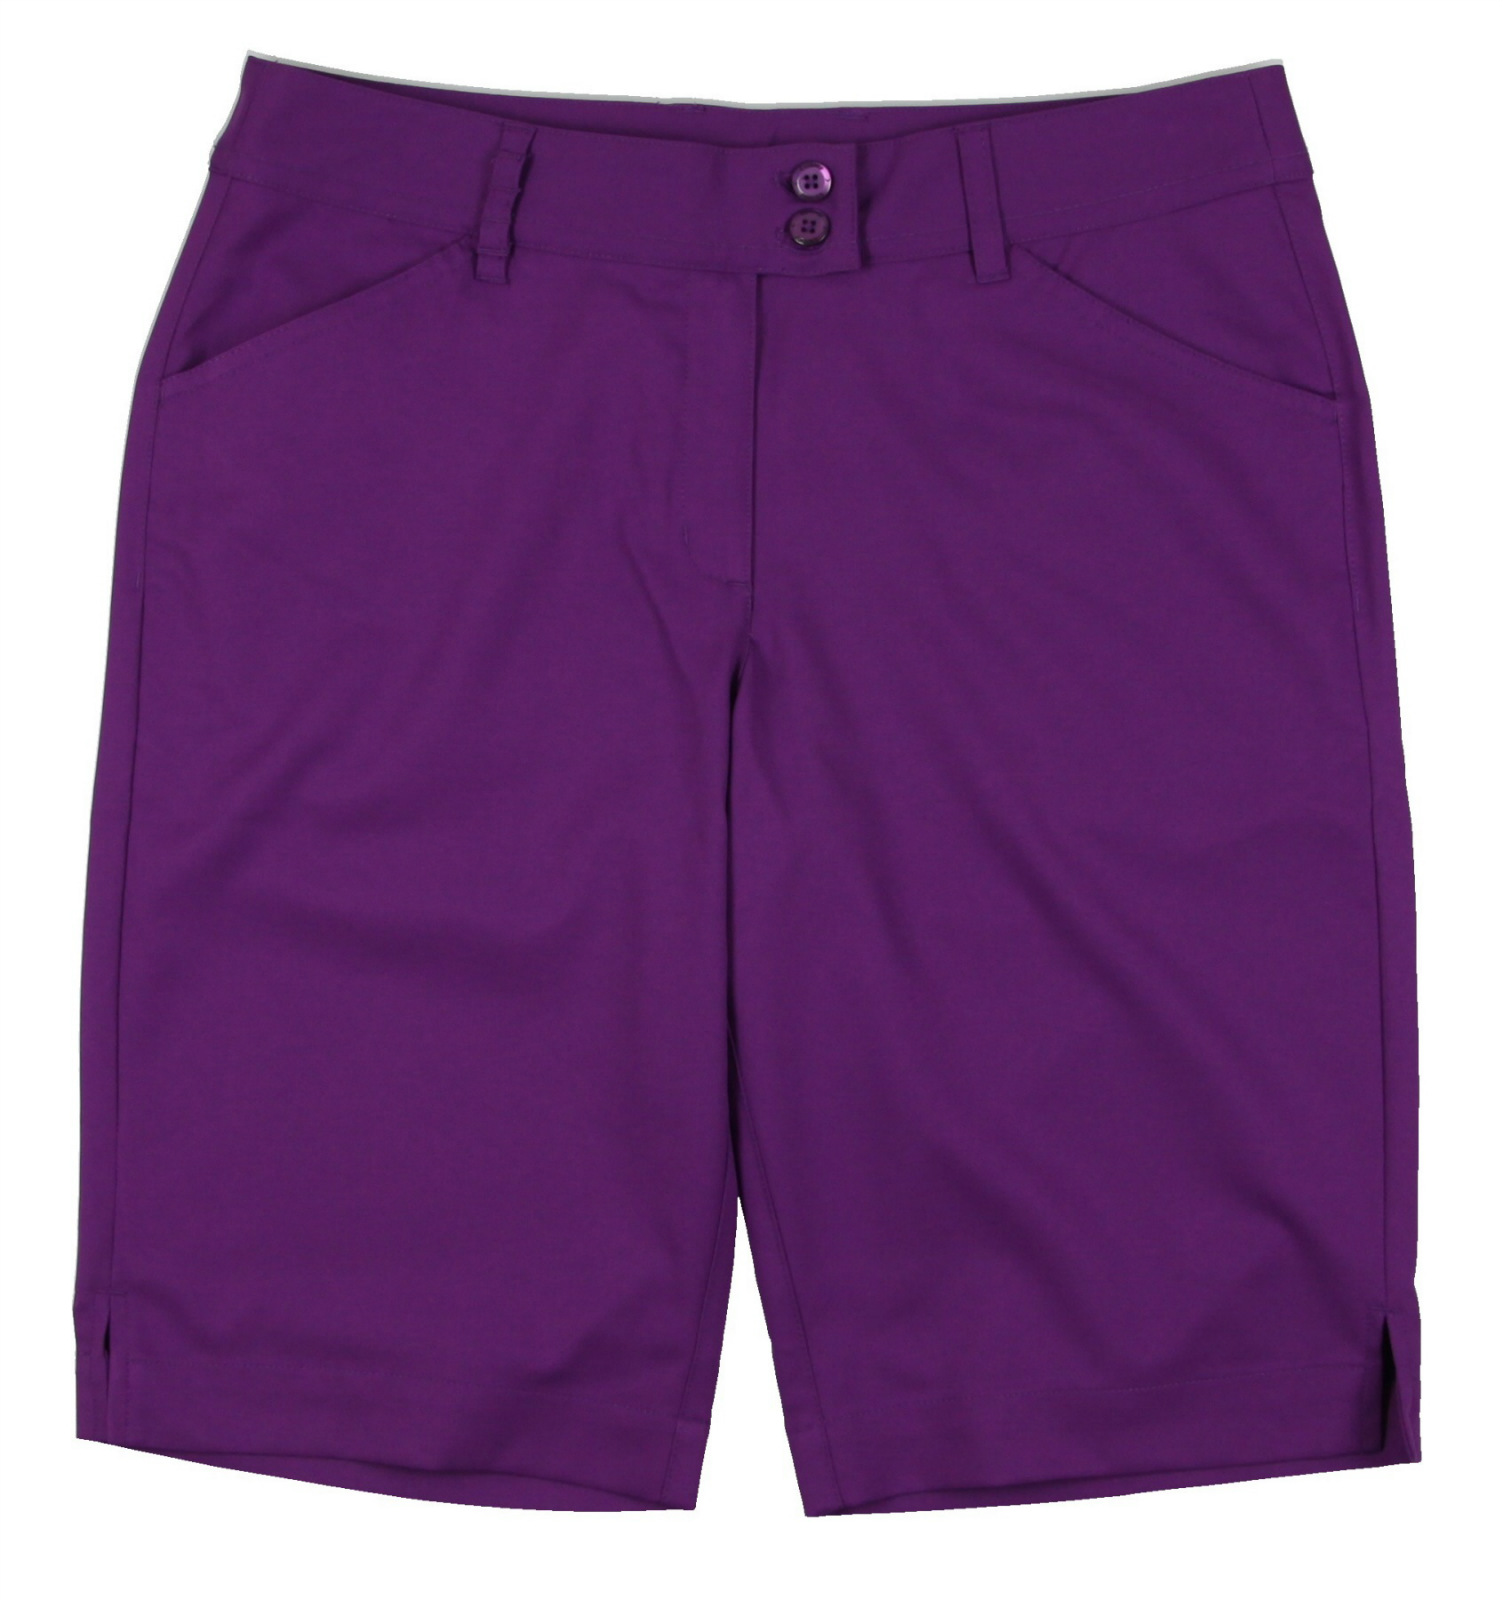 NEW Women'S Callaway Golf Shorts Purple Magic USA Size 4 MSRP $65 00 | eBay